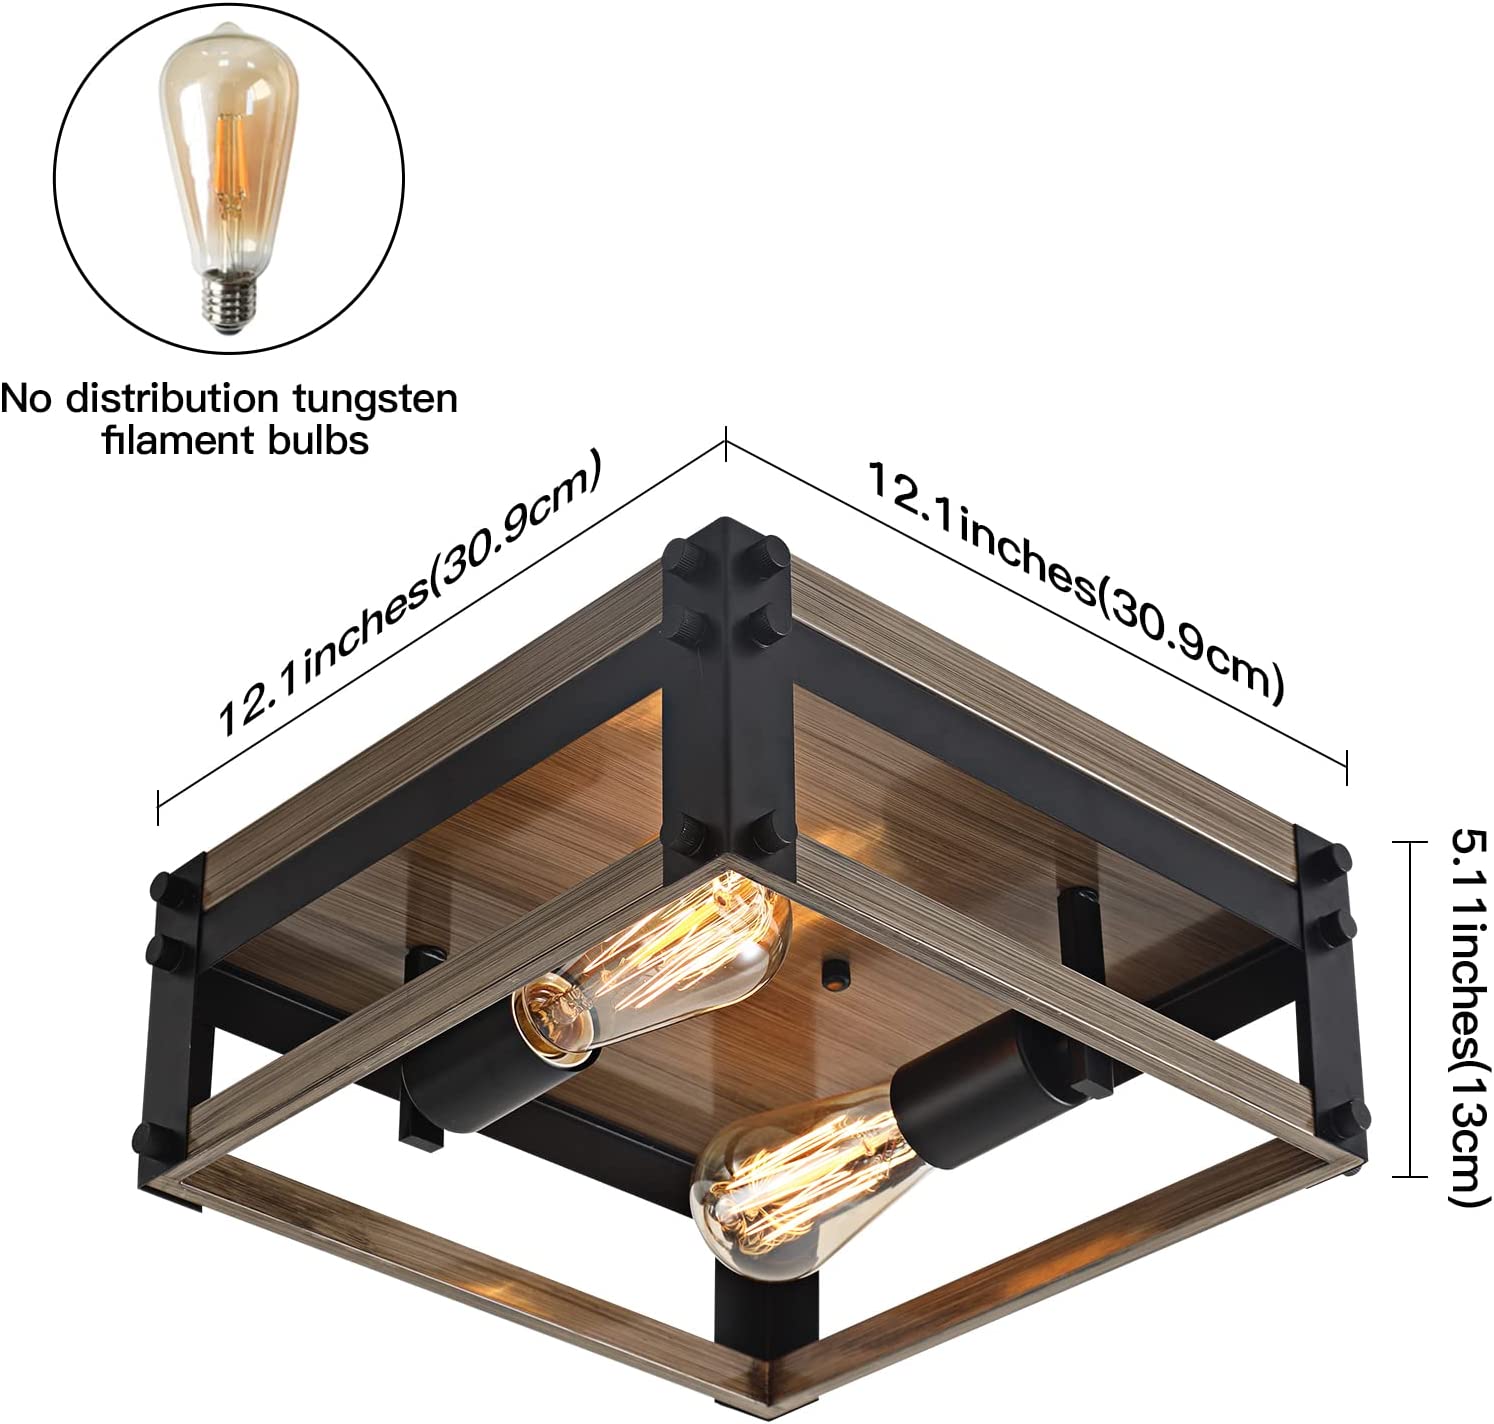 2 light flush mount ceiling light fixture farmhouse rust black and wood ceiling lamp